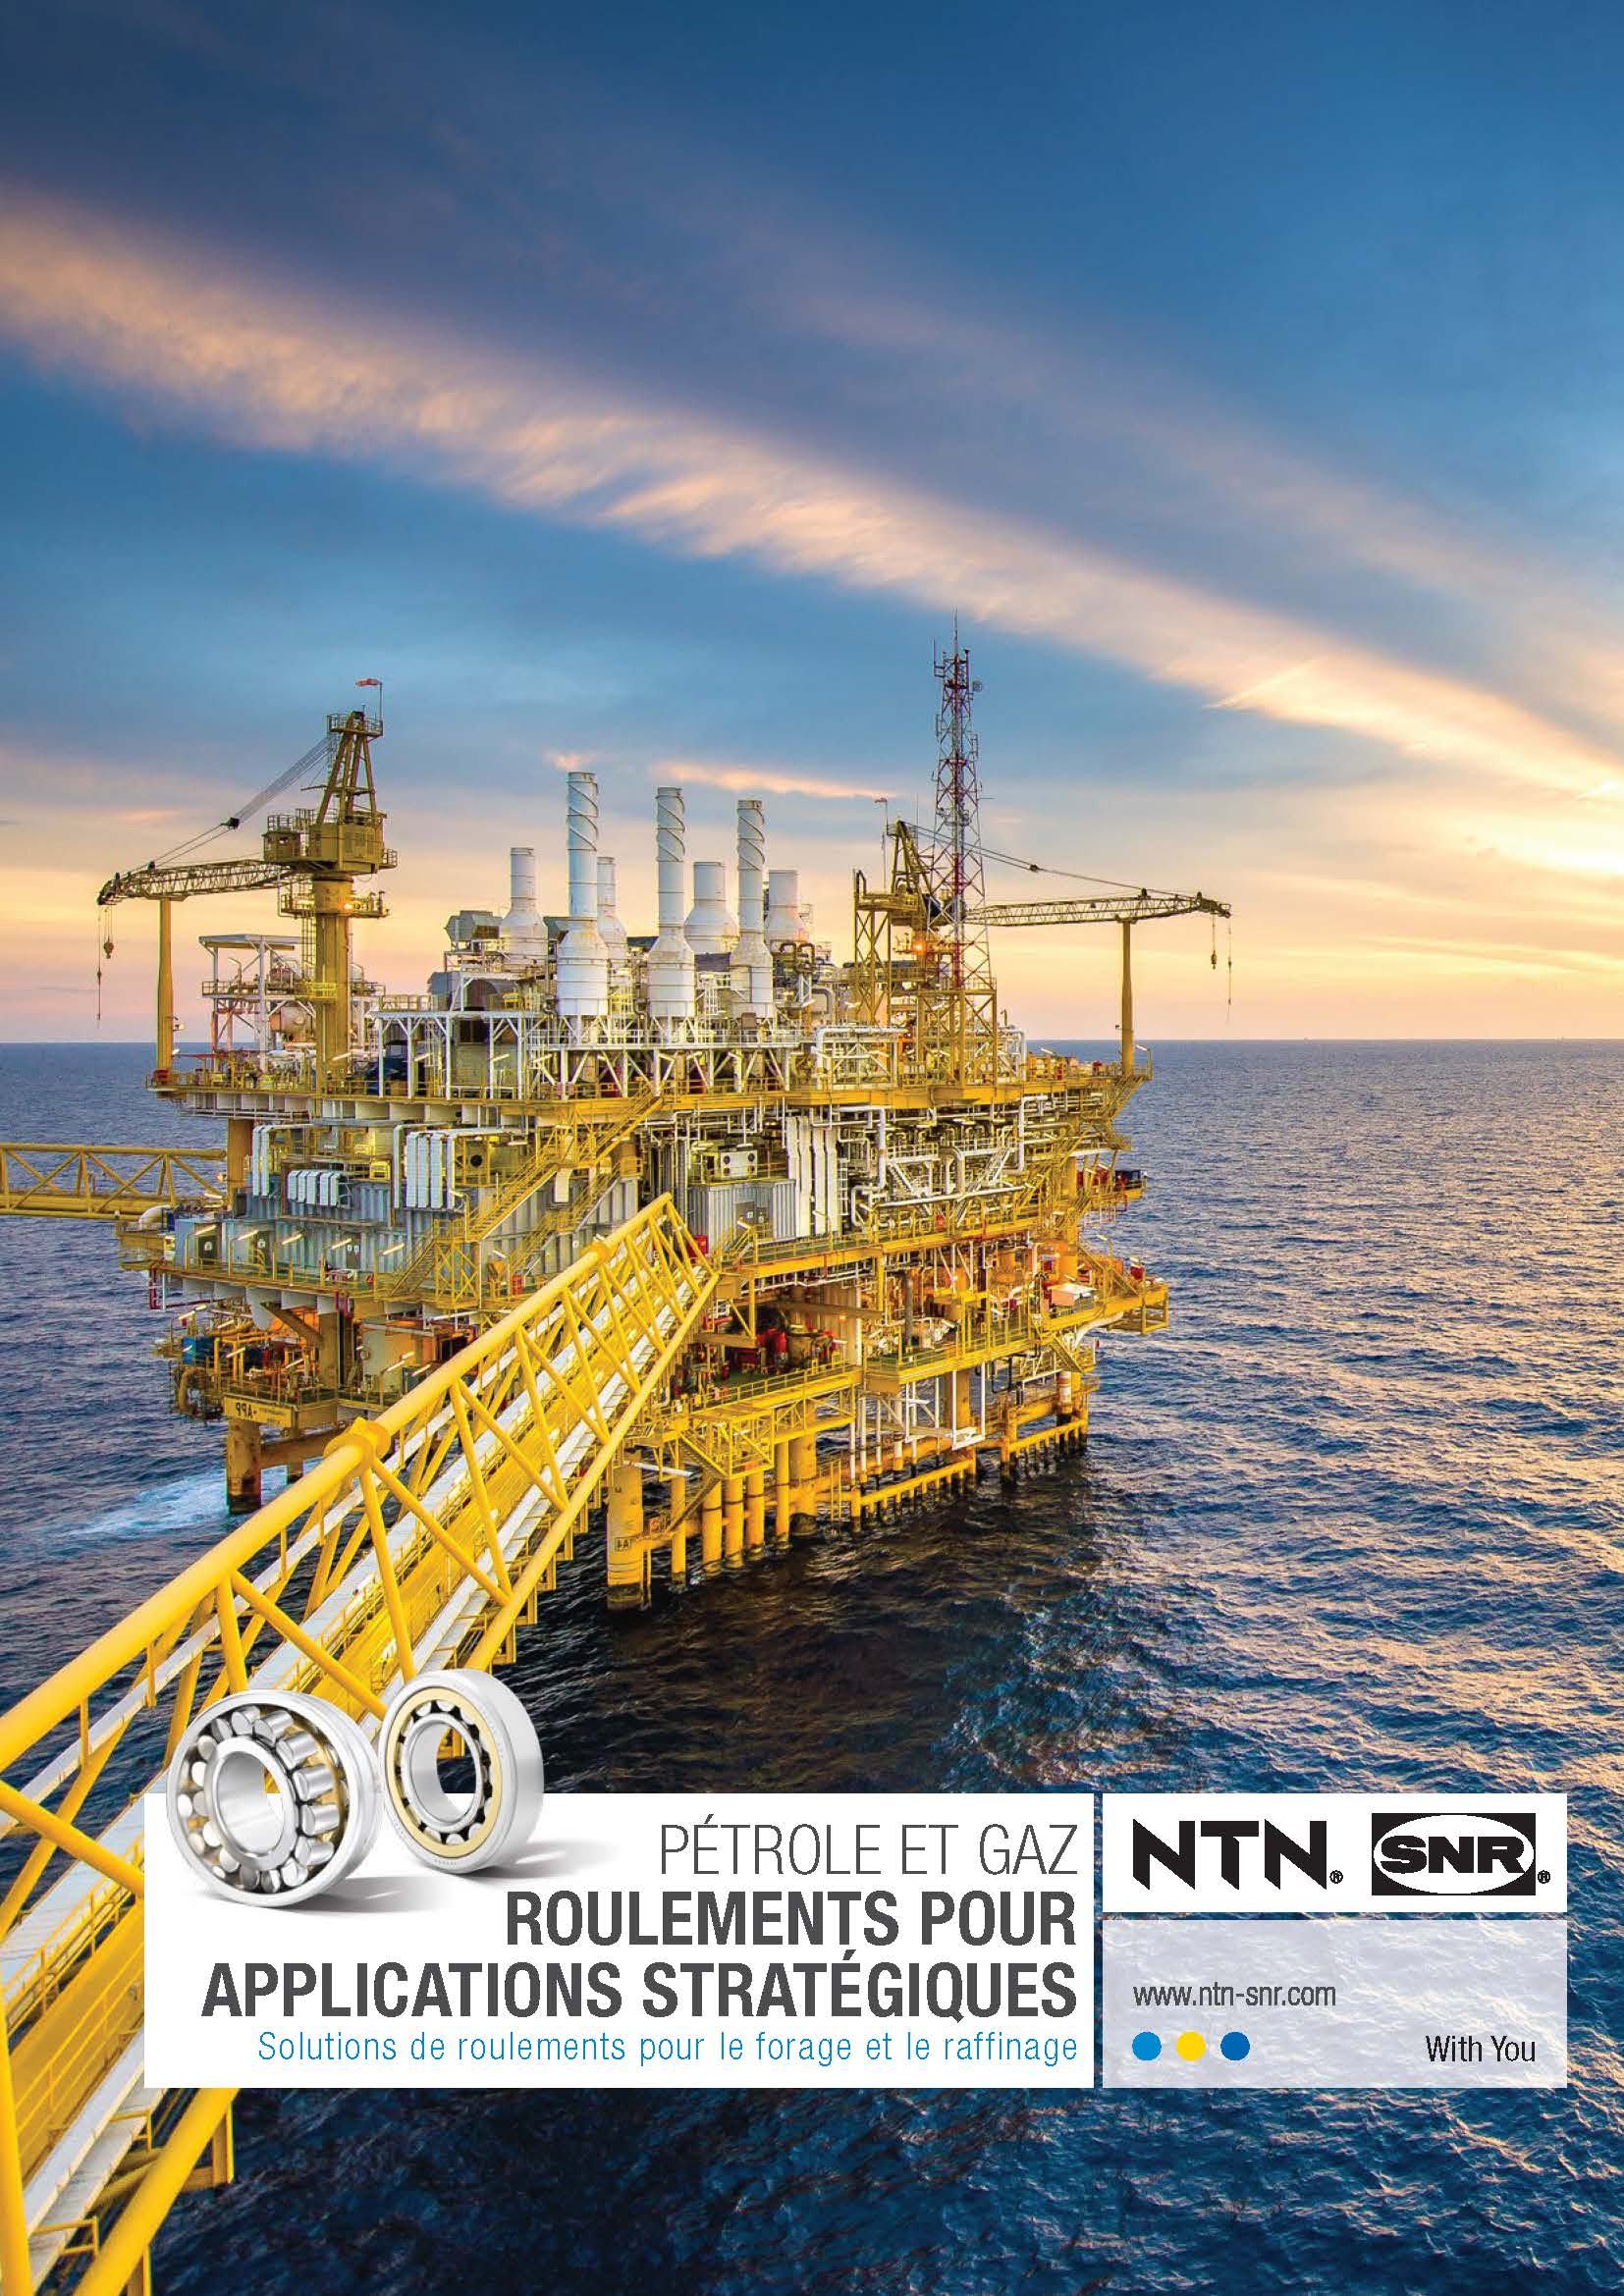 NTN SNR Oil and Gas FR c 1